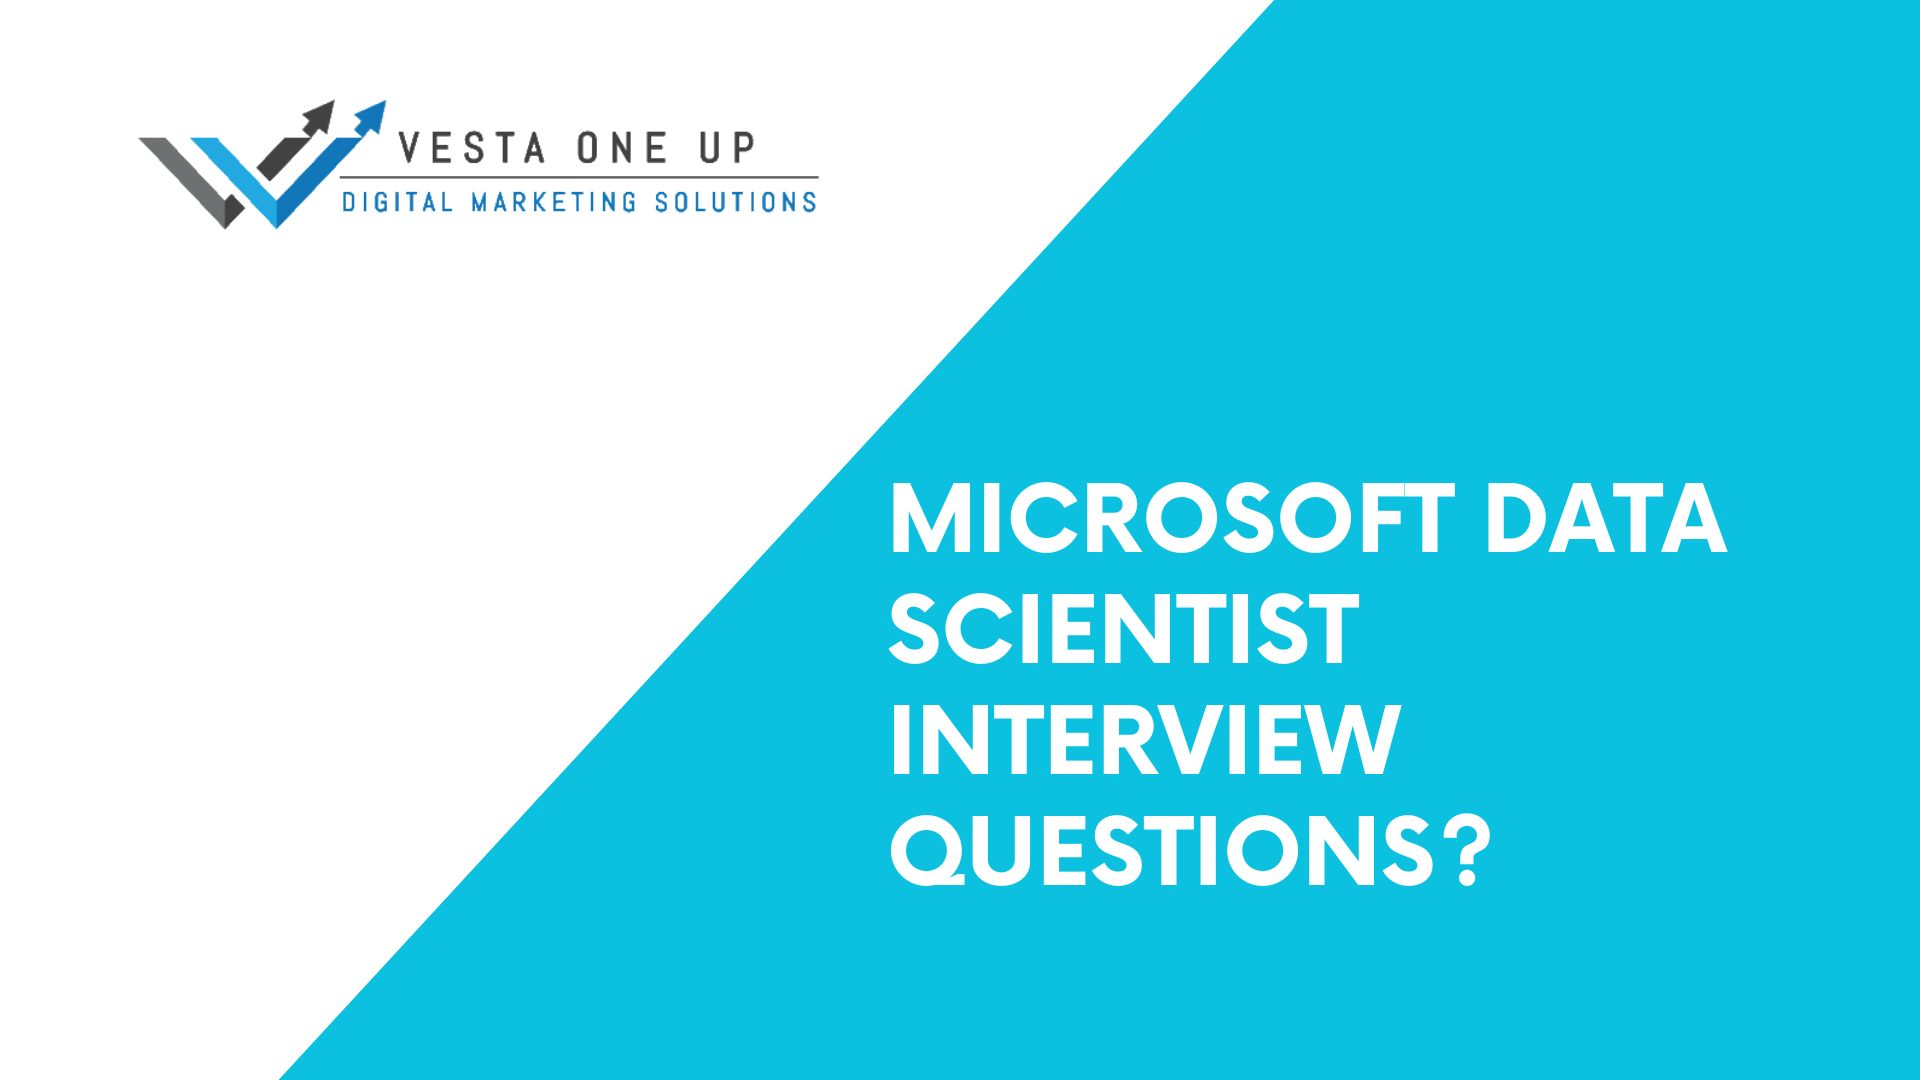 Microsoft data scientist interview questions?